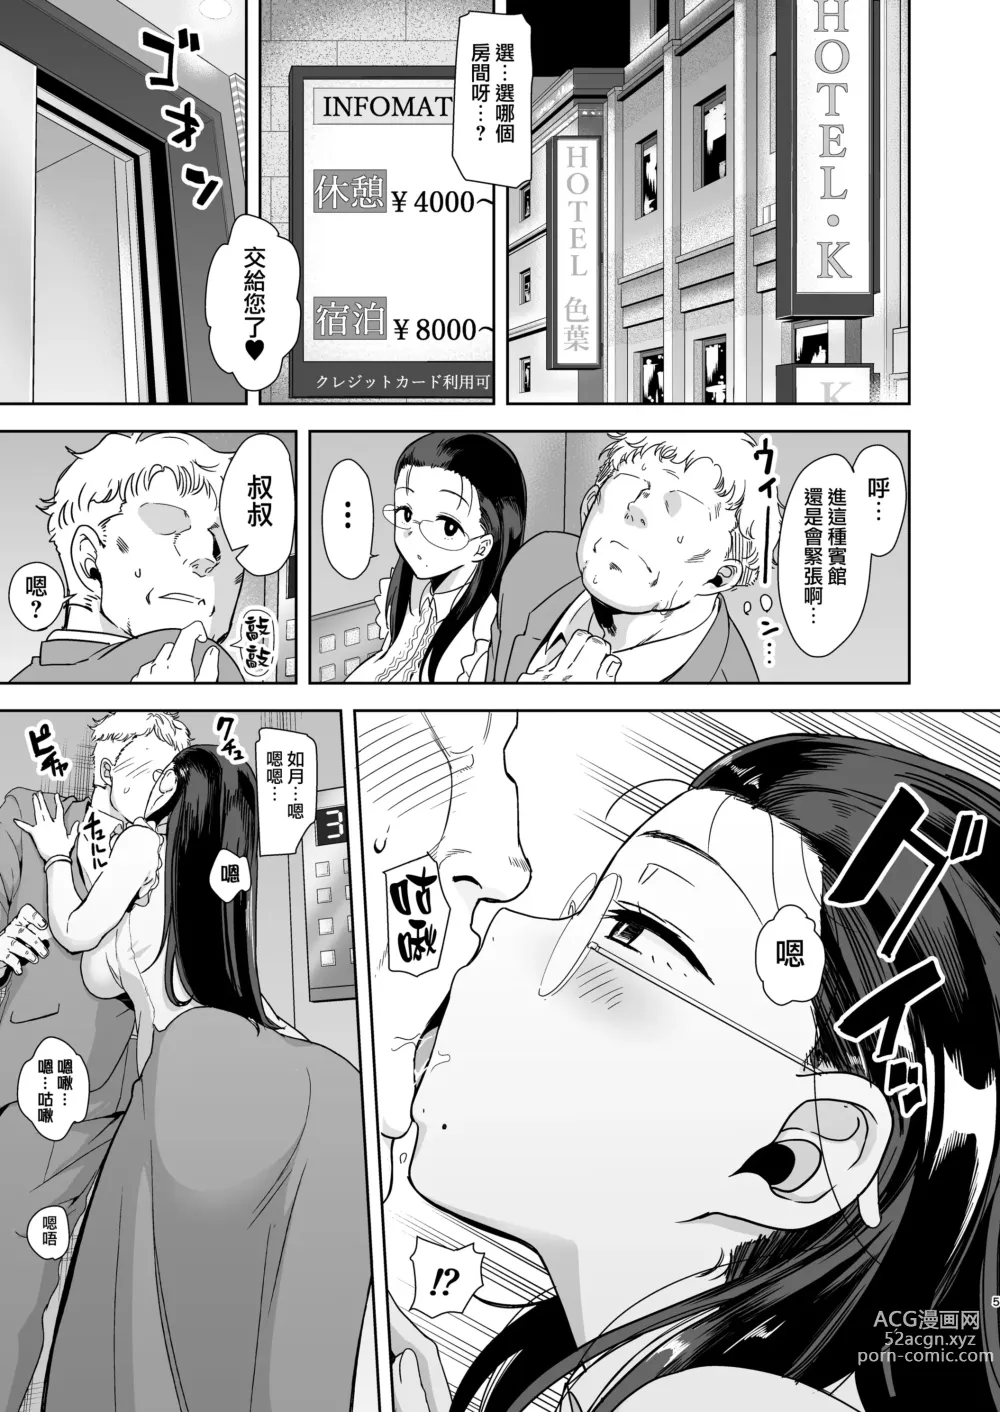 Page 4 of manga 聖華女学院高等部公認竿おじさん 1